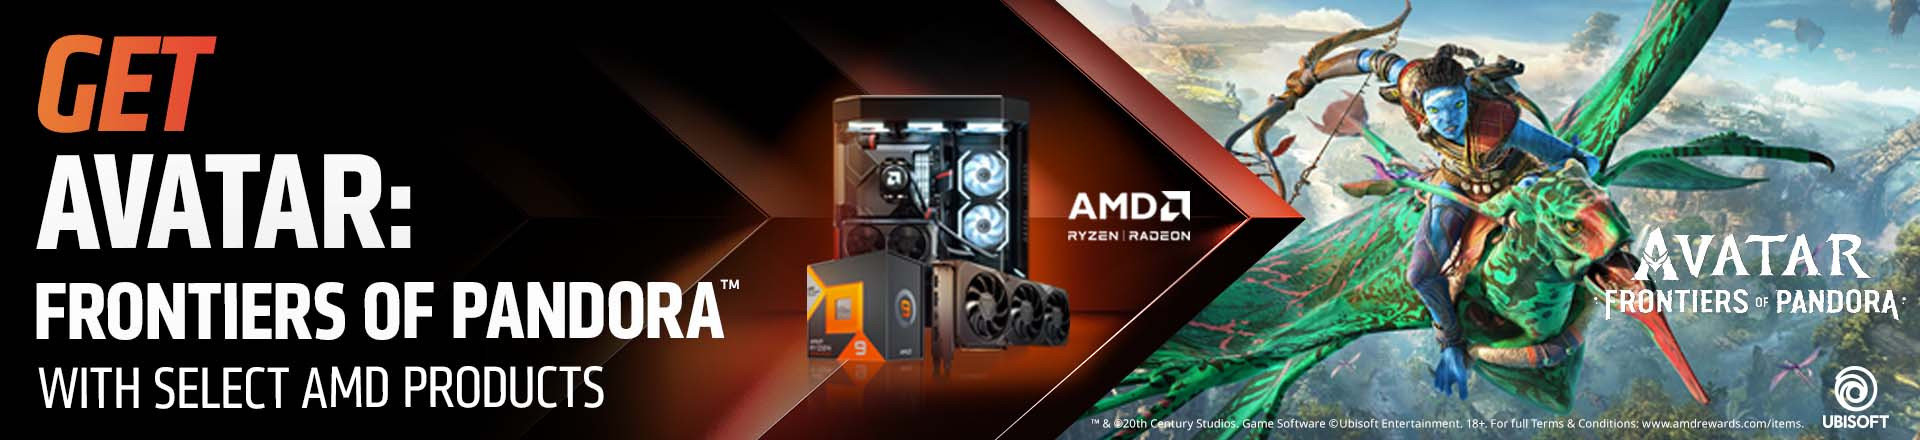 AMD Avatar